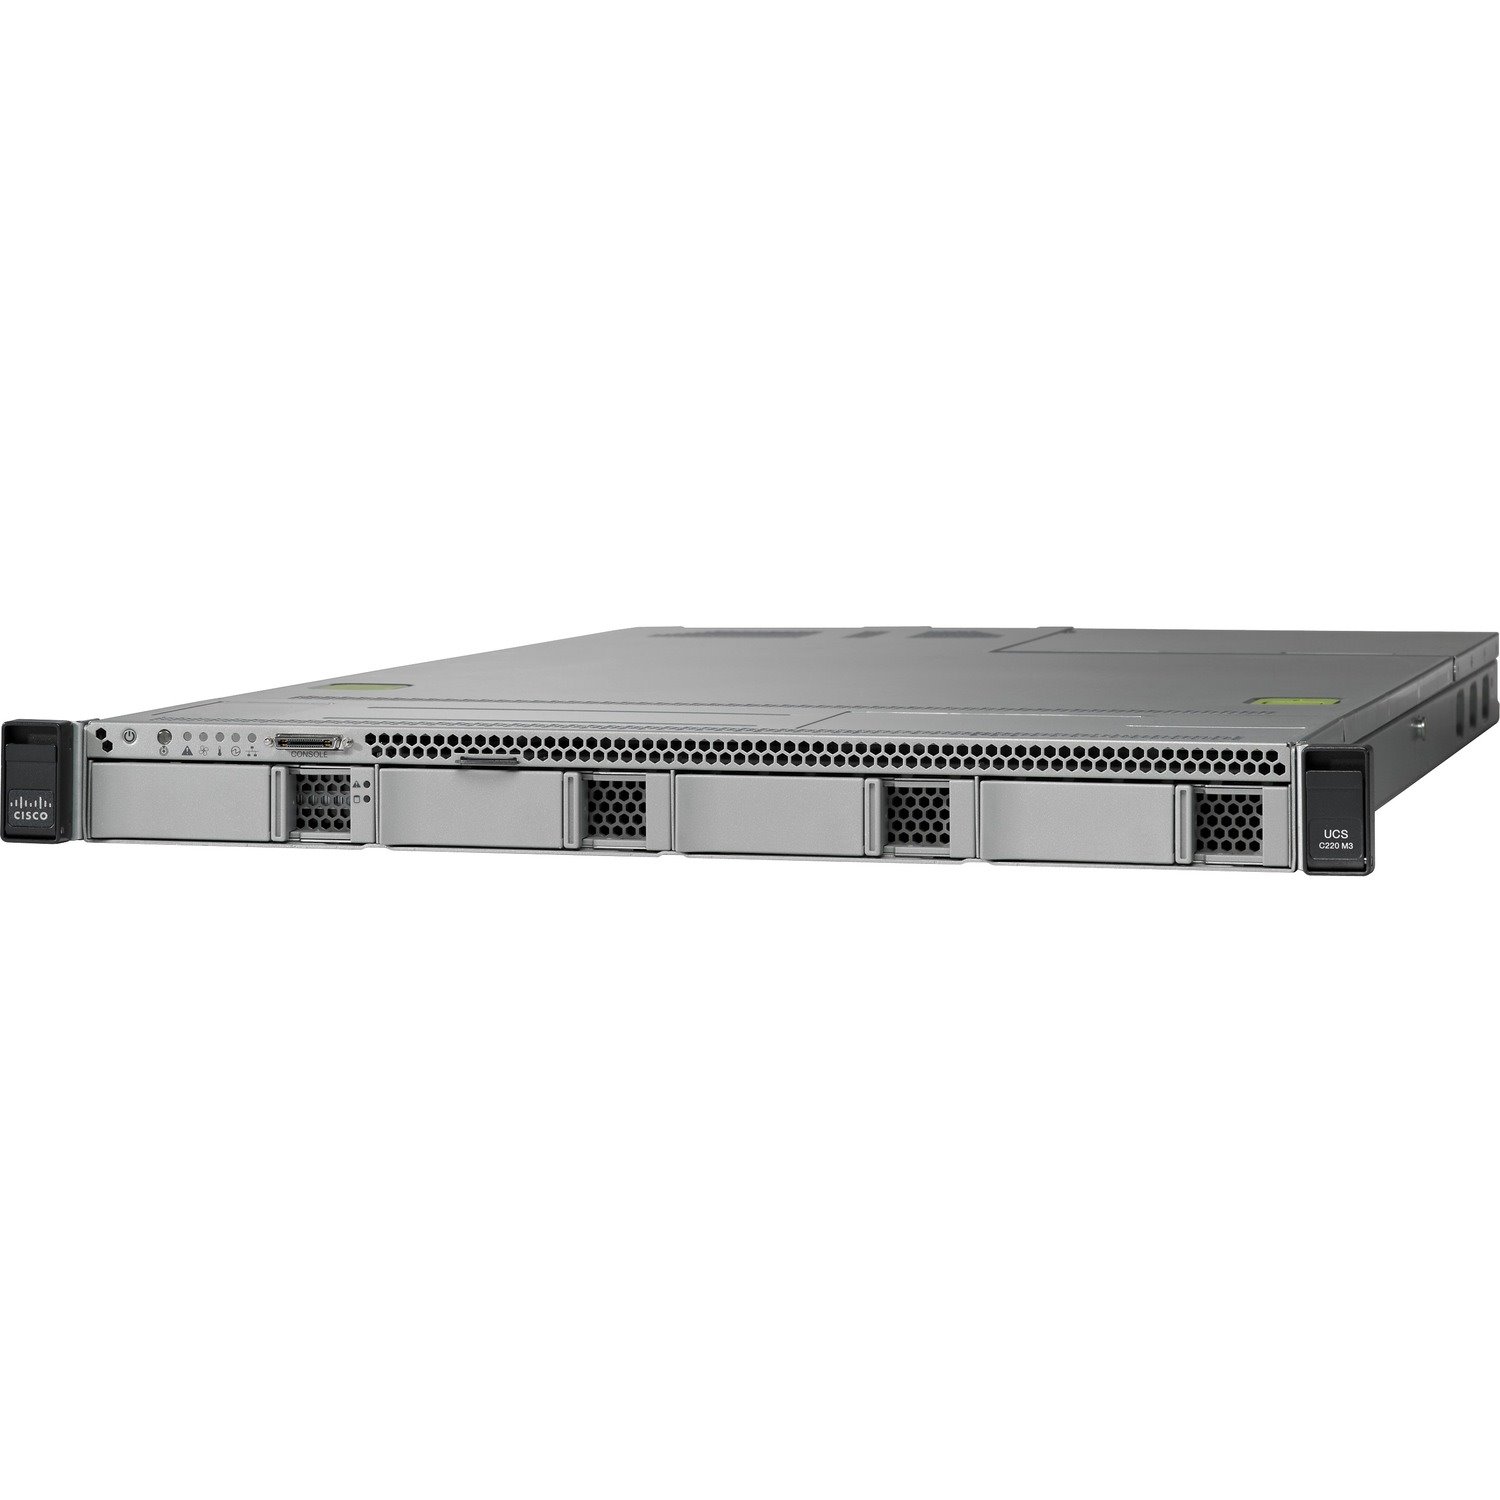 Cisco C220 M3 1U Rack Server - 2 x Intel Xeon E5-2609 2.40 GHz - 32 GB RAM - 2 TB HDD - (4 x 500GB) HDD Configuration - Serial ATA/600, Serial Attached SCSI (SAS) Controller - Refurbished